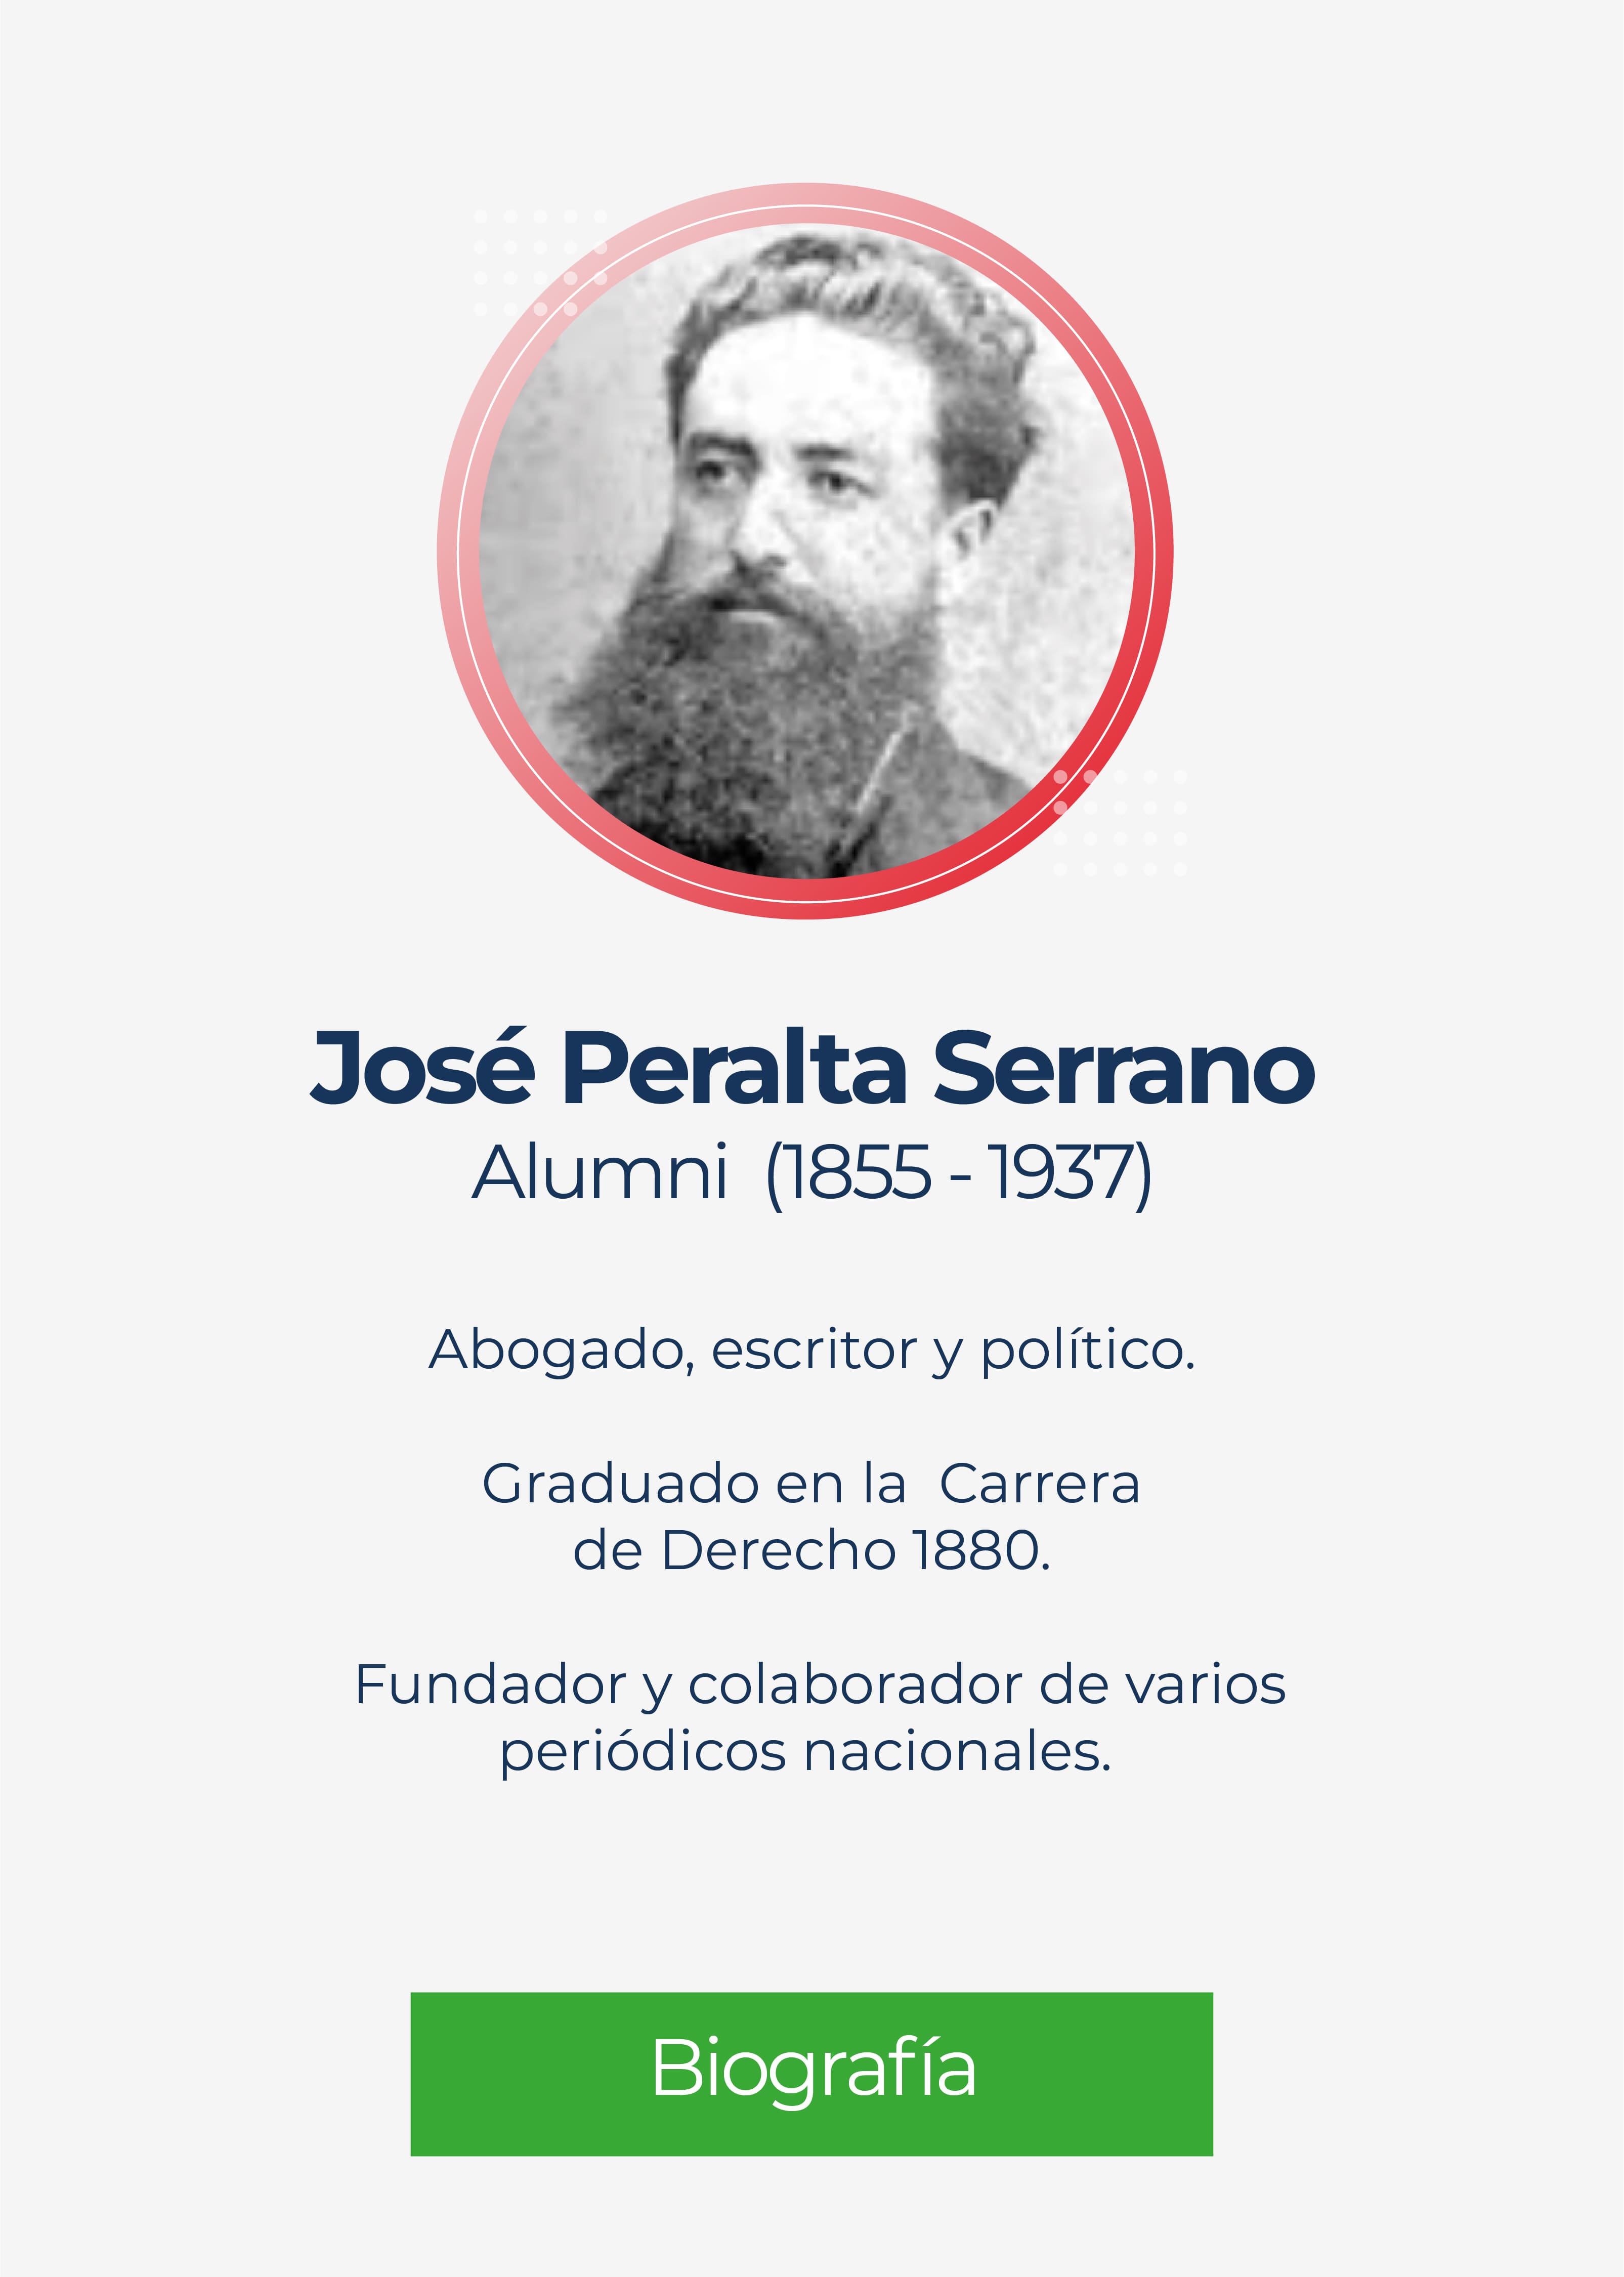 José Peralta Serrano